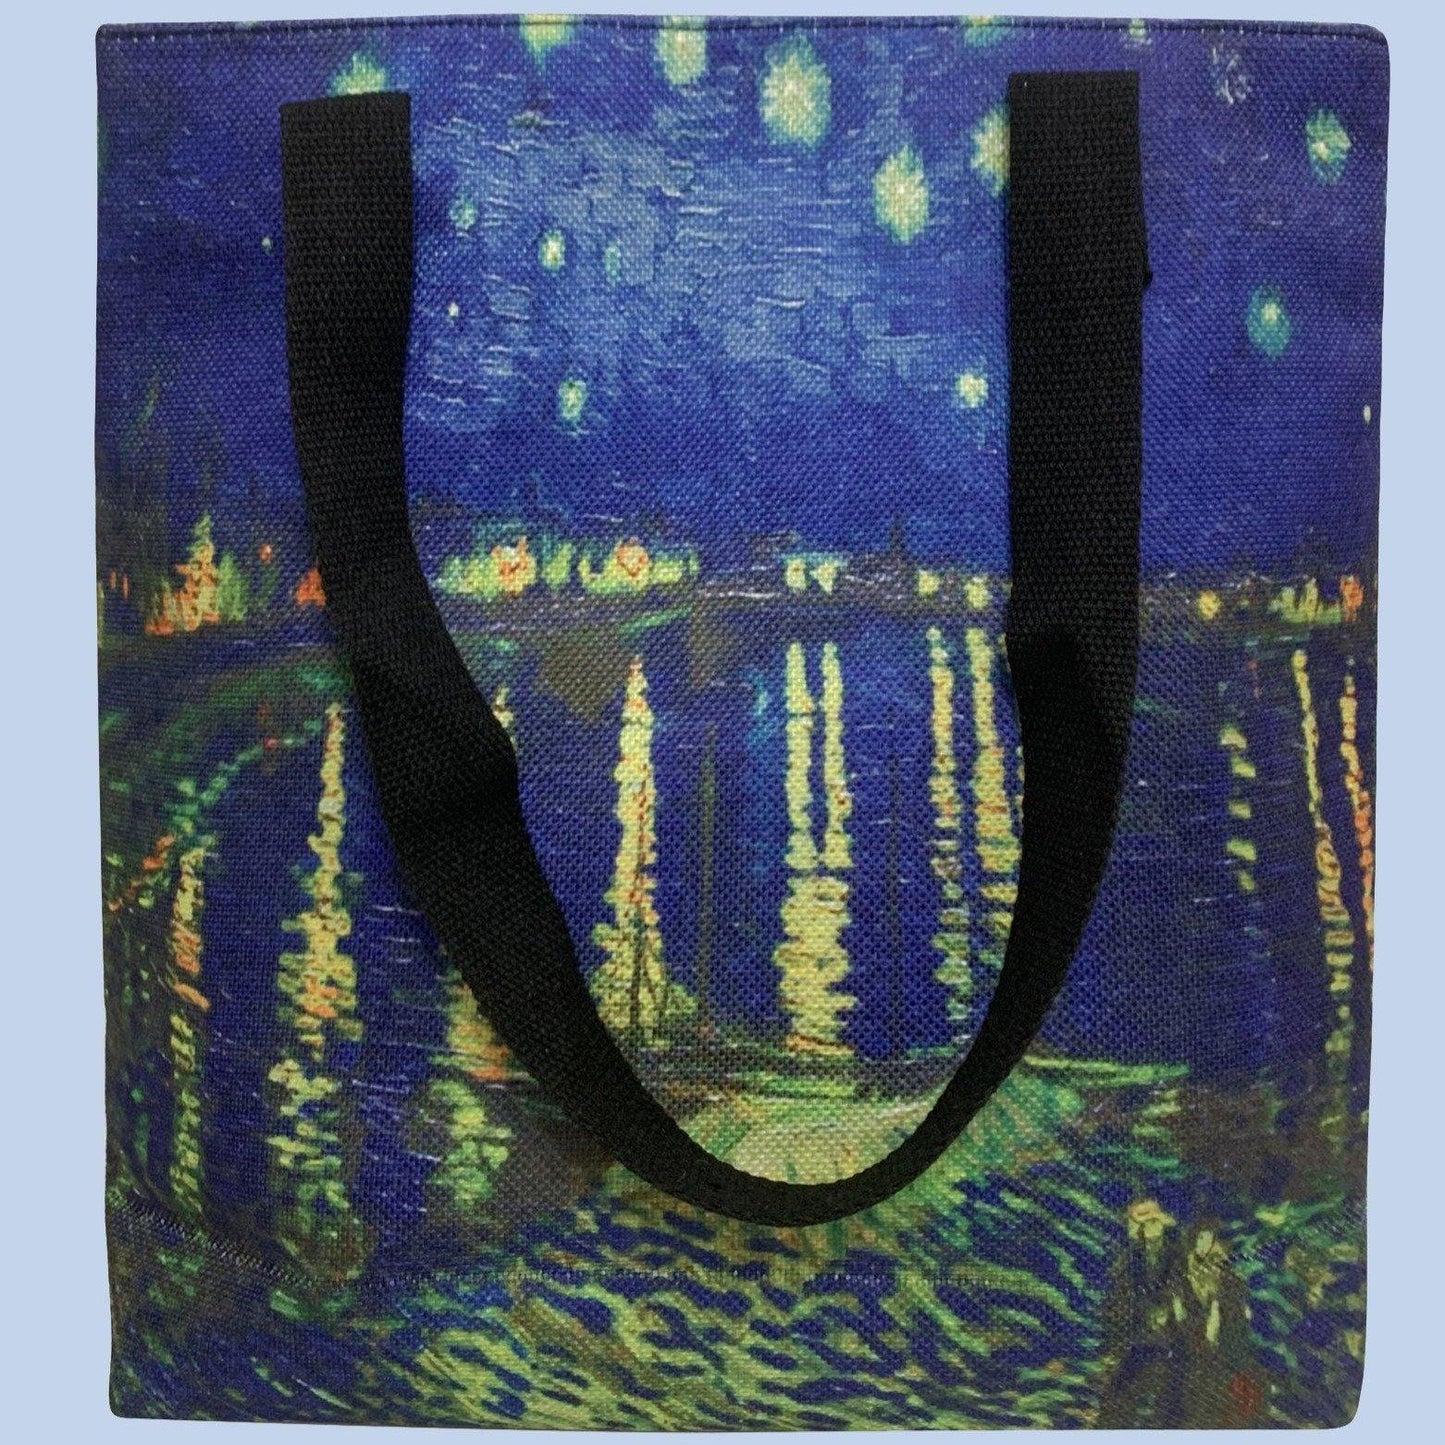 Nákupná taška, Van Gogh - Starry Night Over The Rhone, 38 cm x 10 cm x 36 cm - KlenotTV.sk